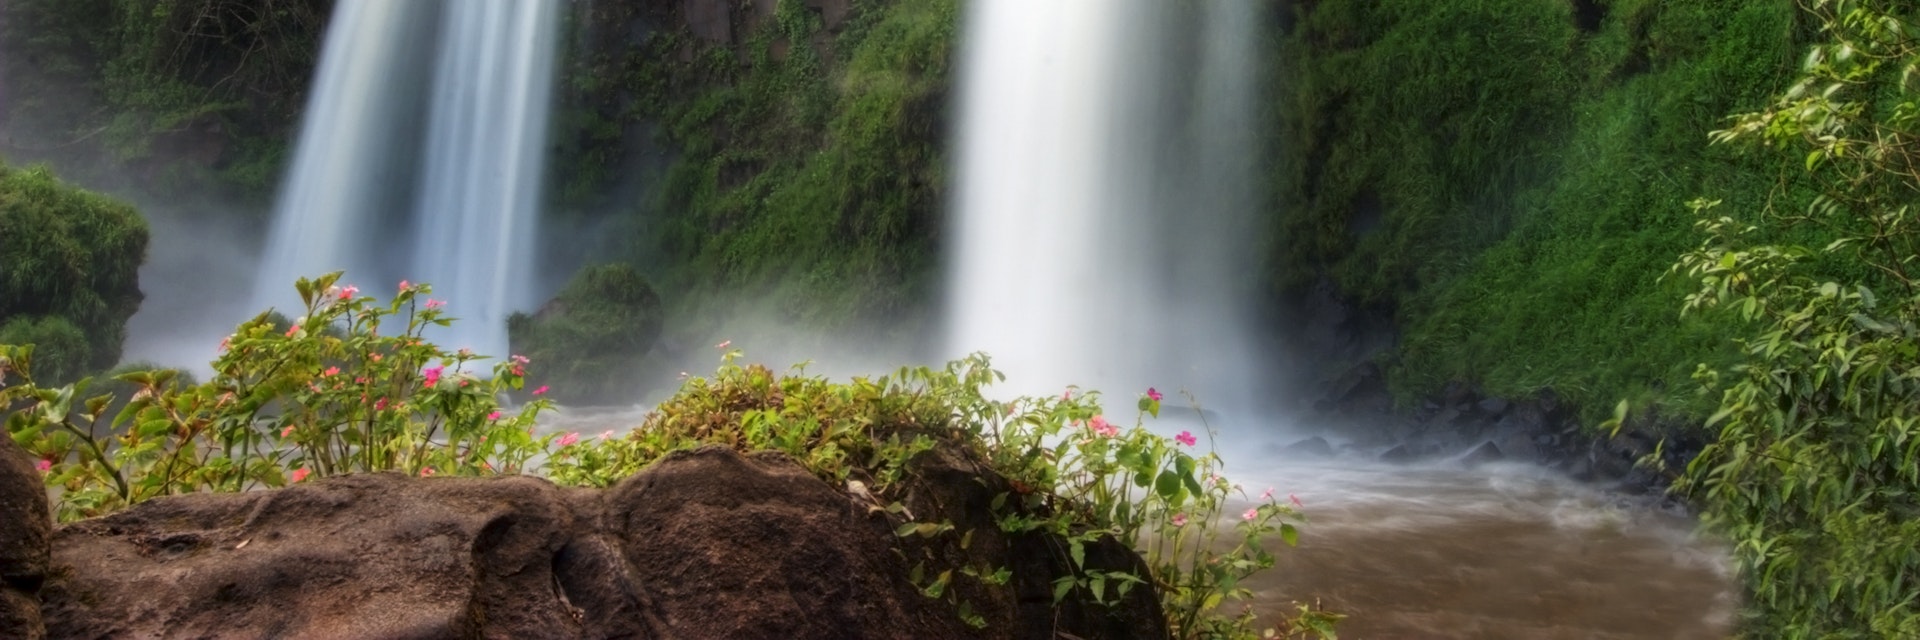 Double Falls at Iguazu Falls bordering Brazil and Argentina